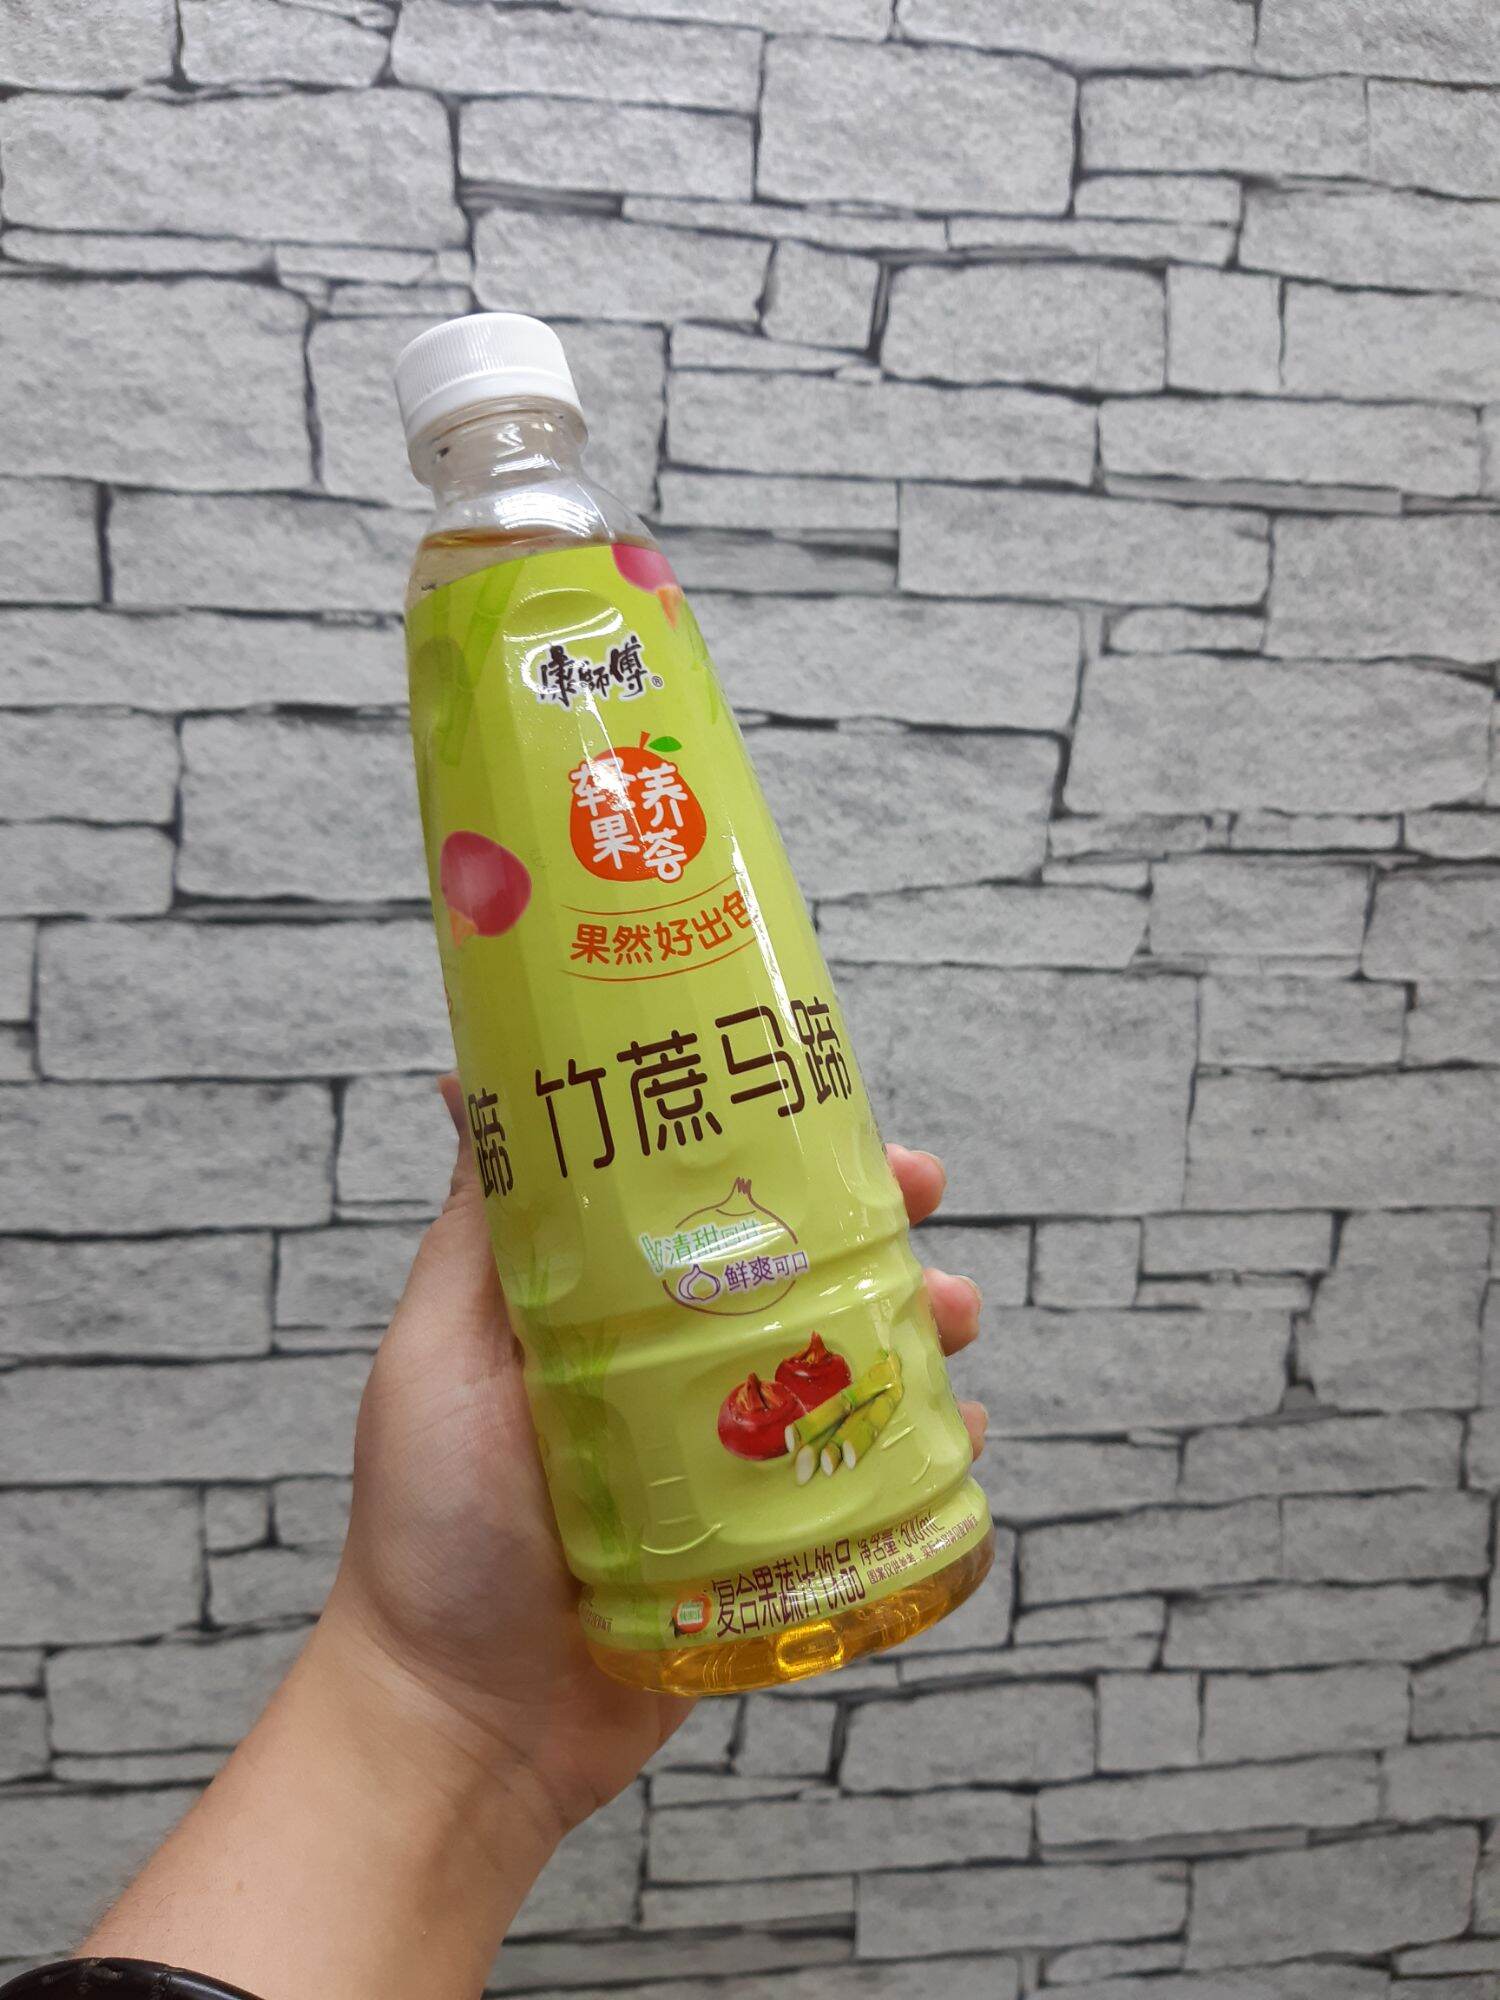 KSF ICE TEA 康师傅 冰红茶 (青苹果) (GREEN APPLE) - Bak Lai Fish Ball Food Industries